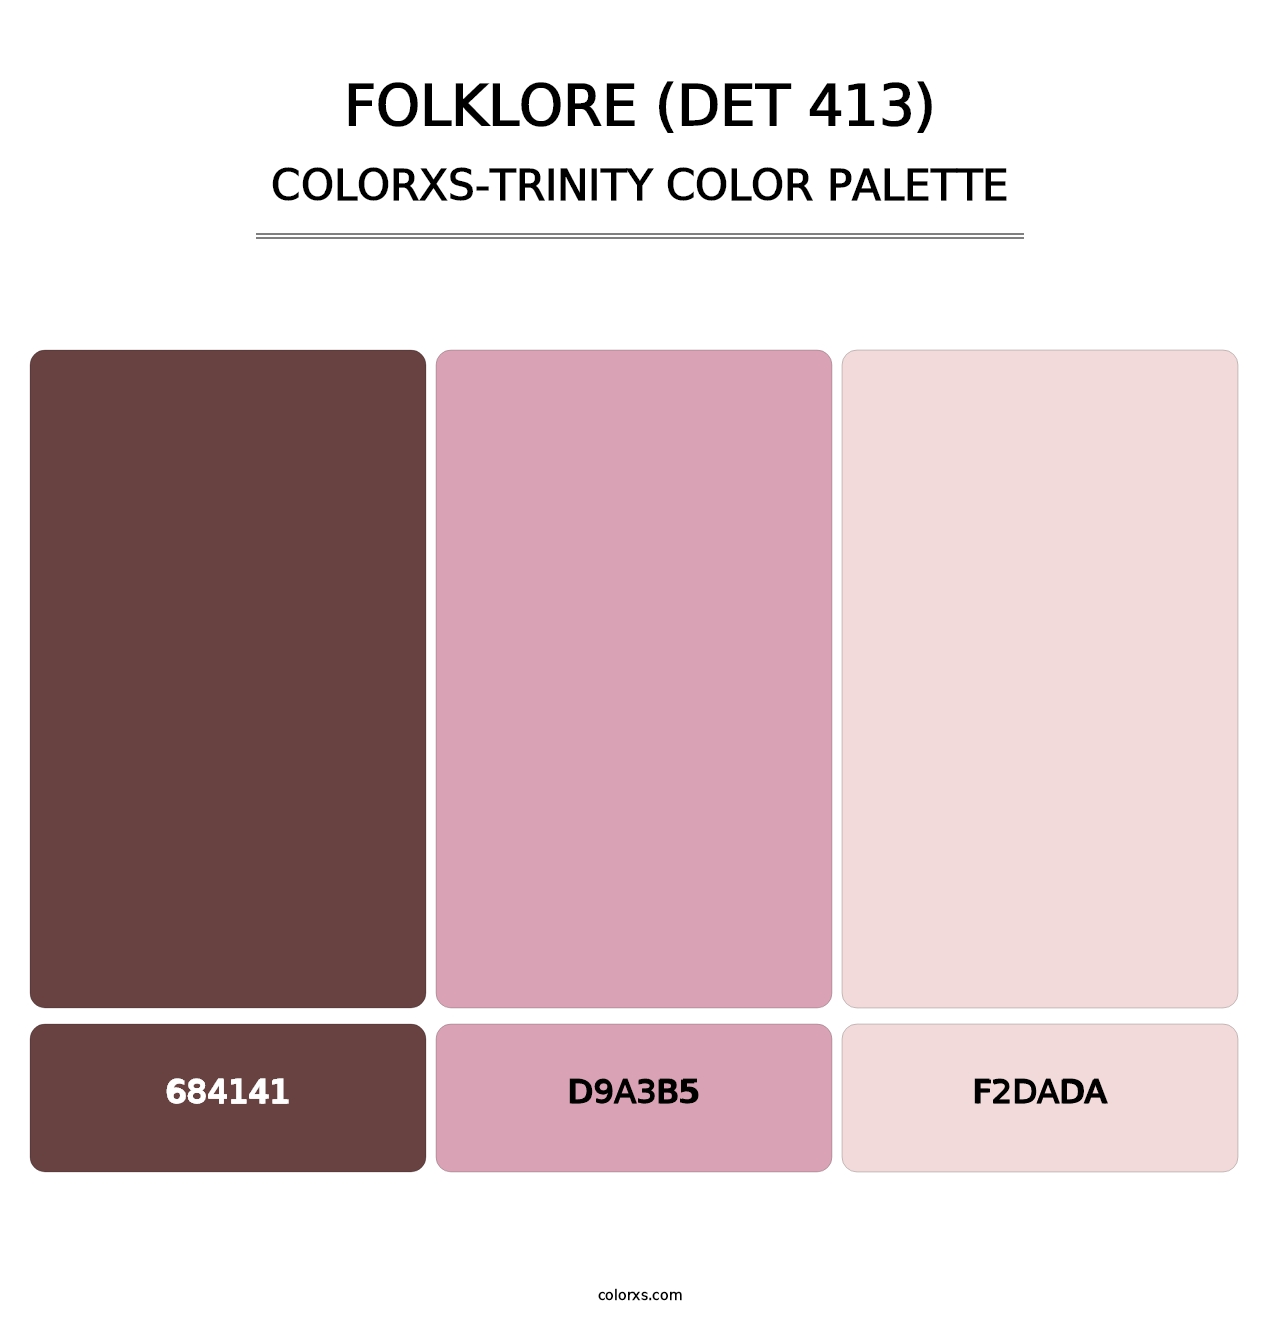 Folklore (DET 413) - Colorxs Trinity Palette